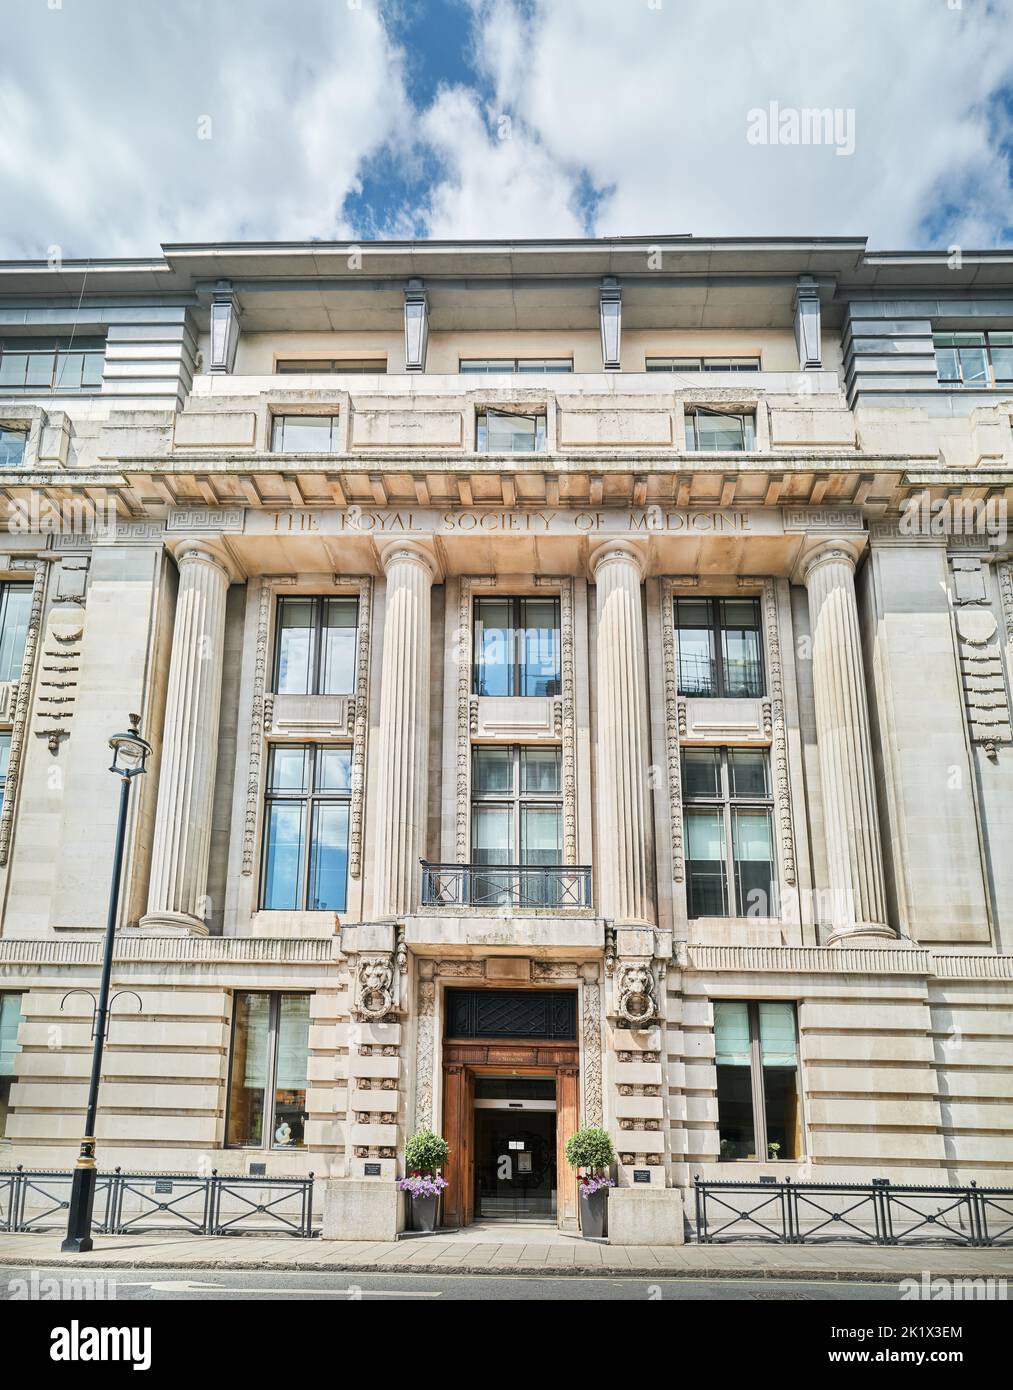 The Royal Society of Medicine building at Henrietta Place, next Harley Street, London, England. Stock Photo